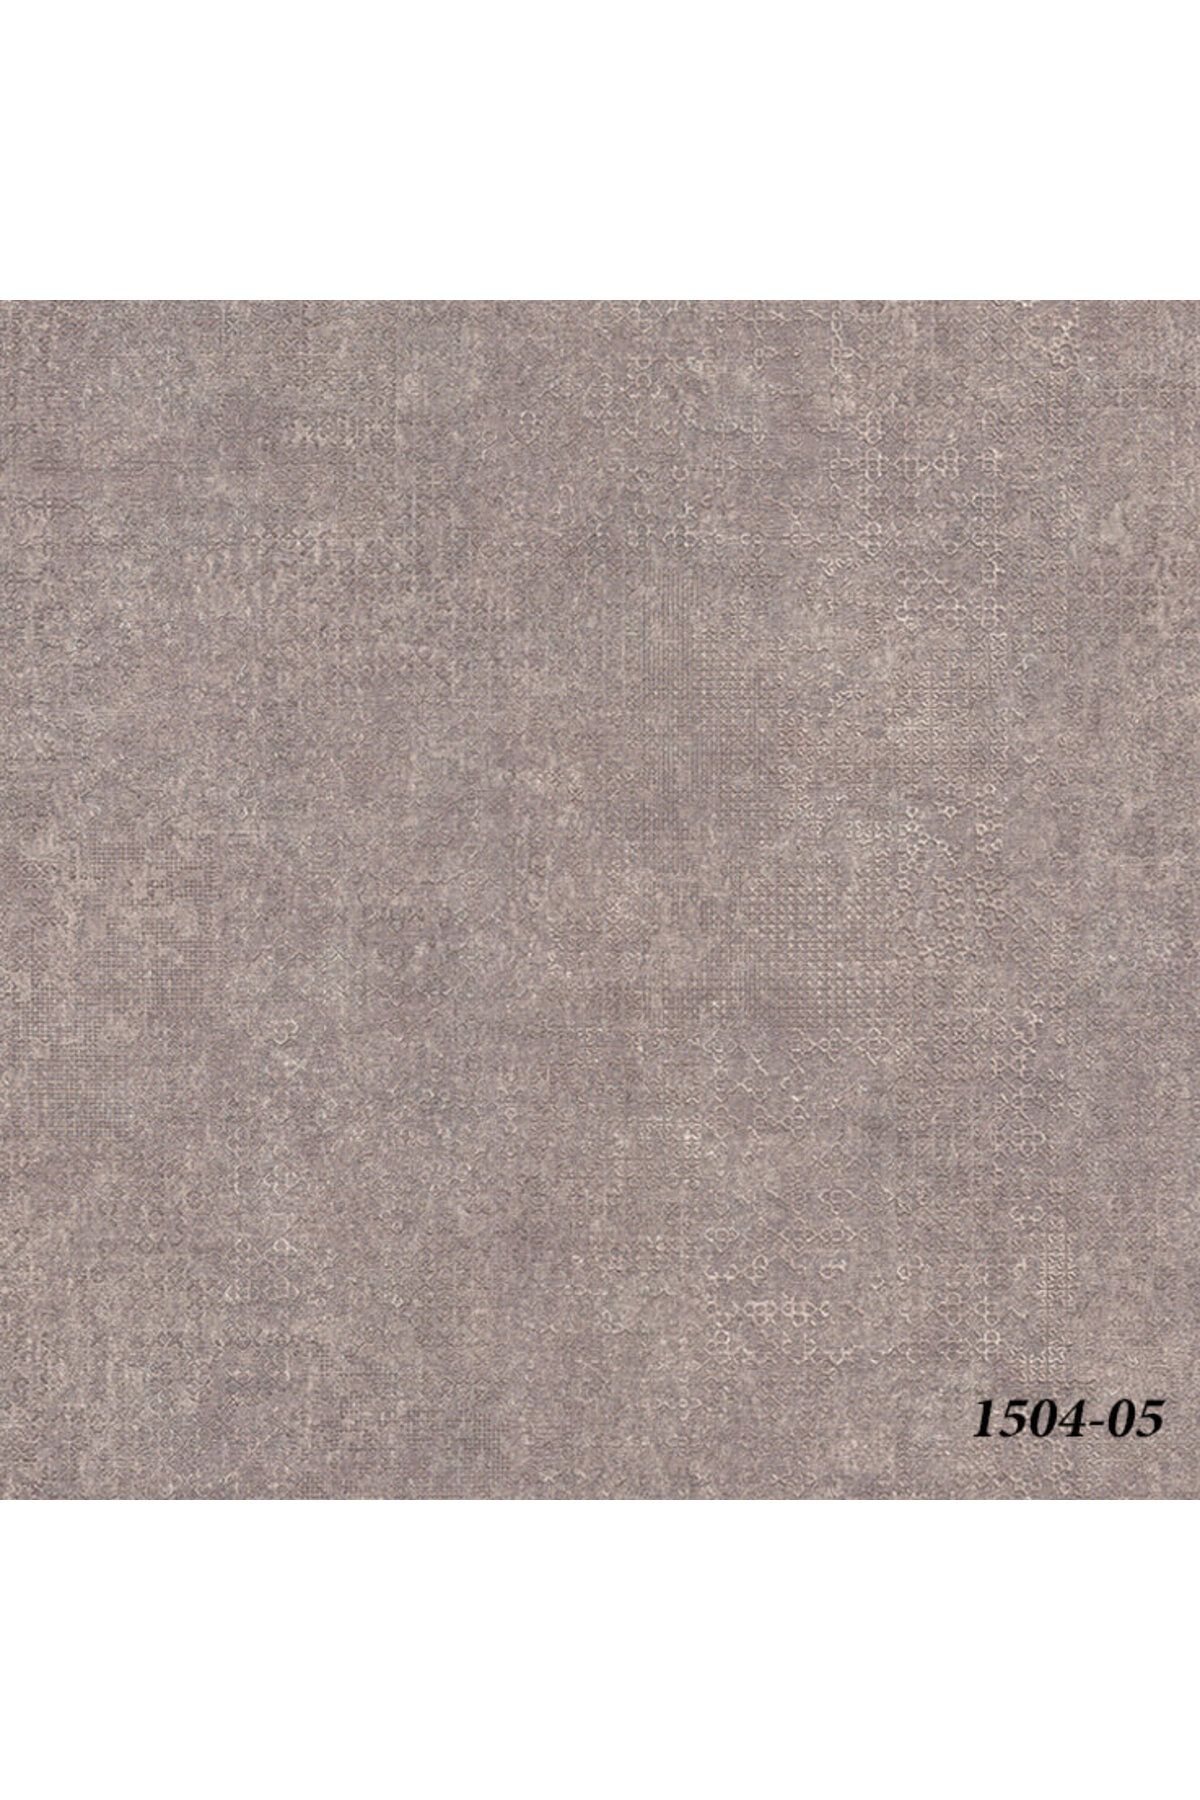 Decowall Orlando 1504-05 Retro Duvar Kağıdı